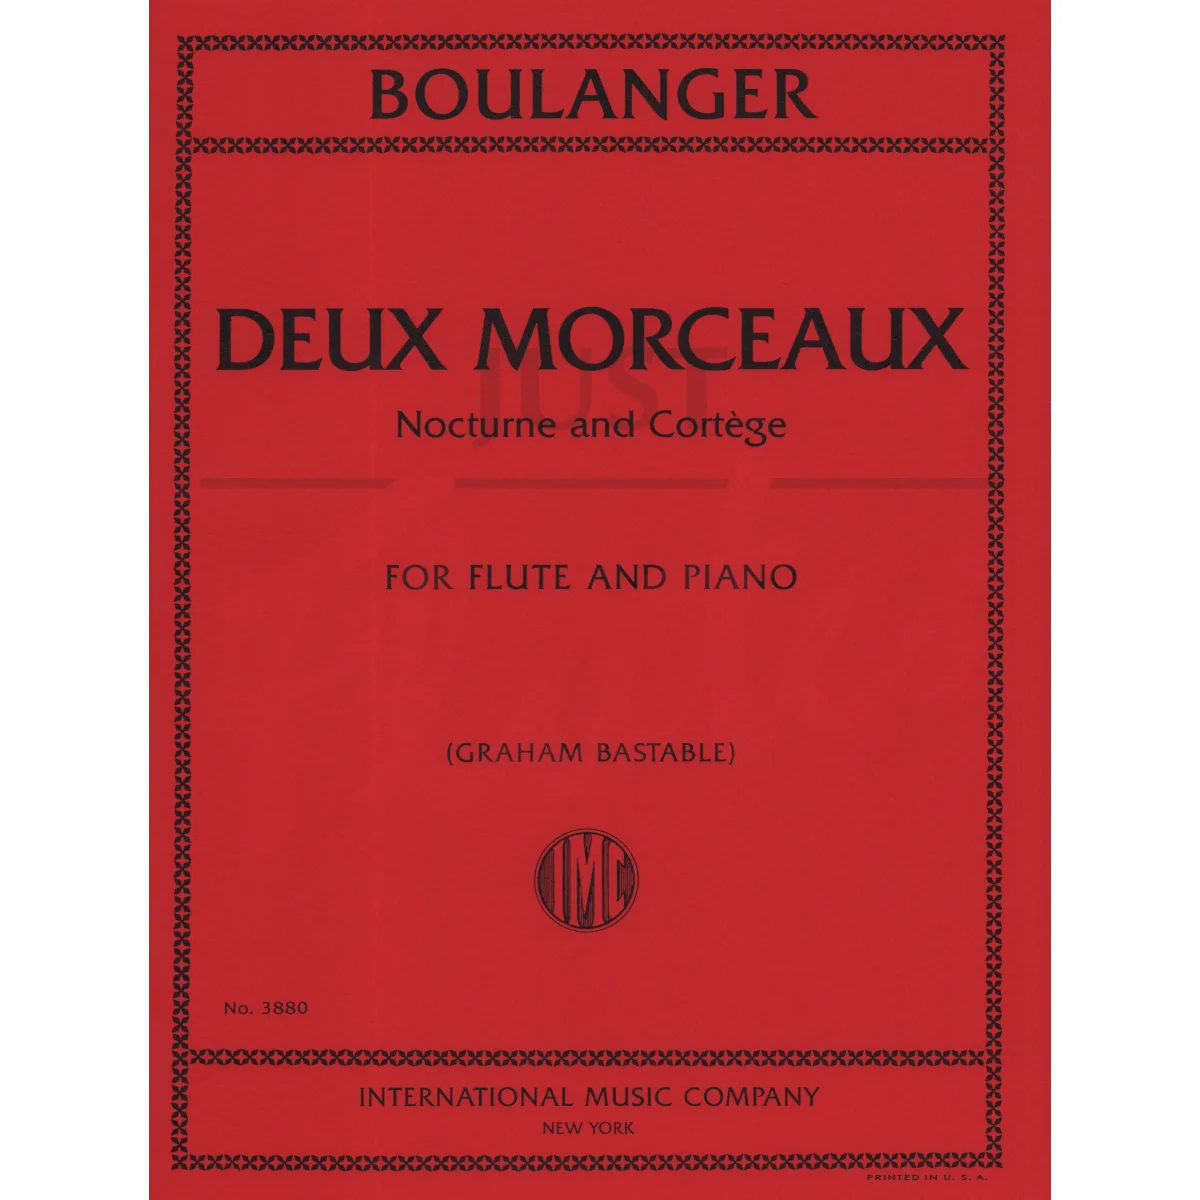 Deux Morceaux for Flute and Piano